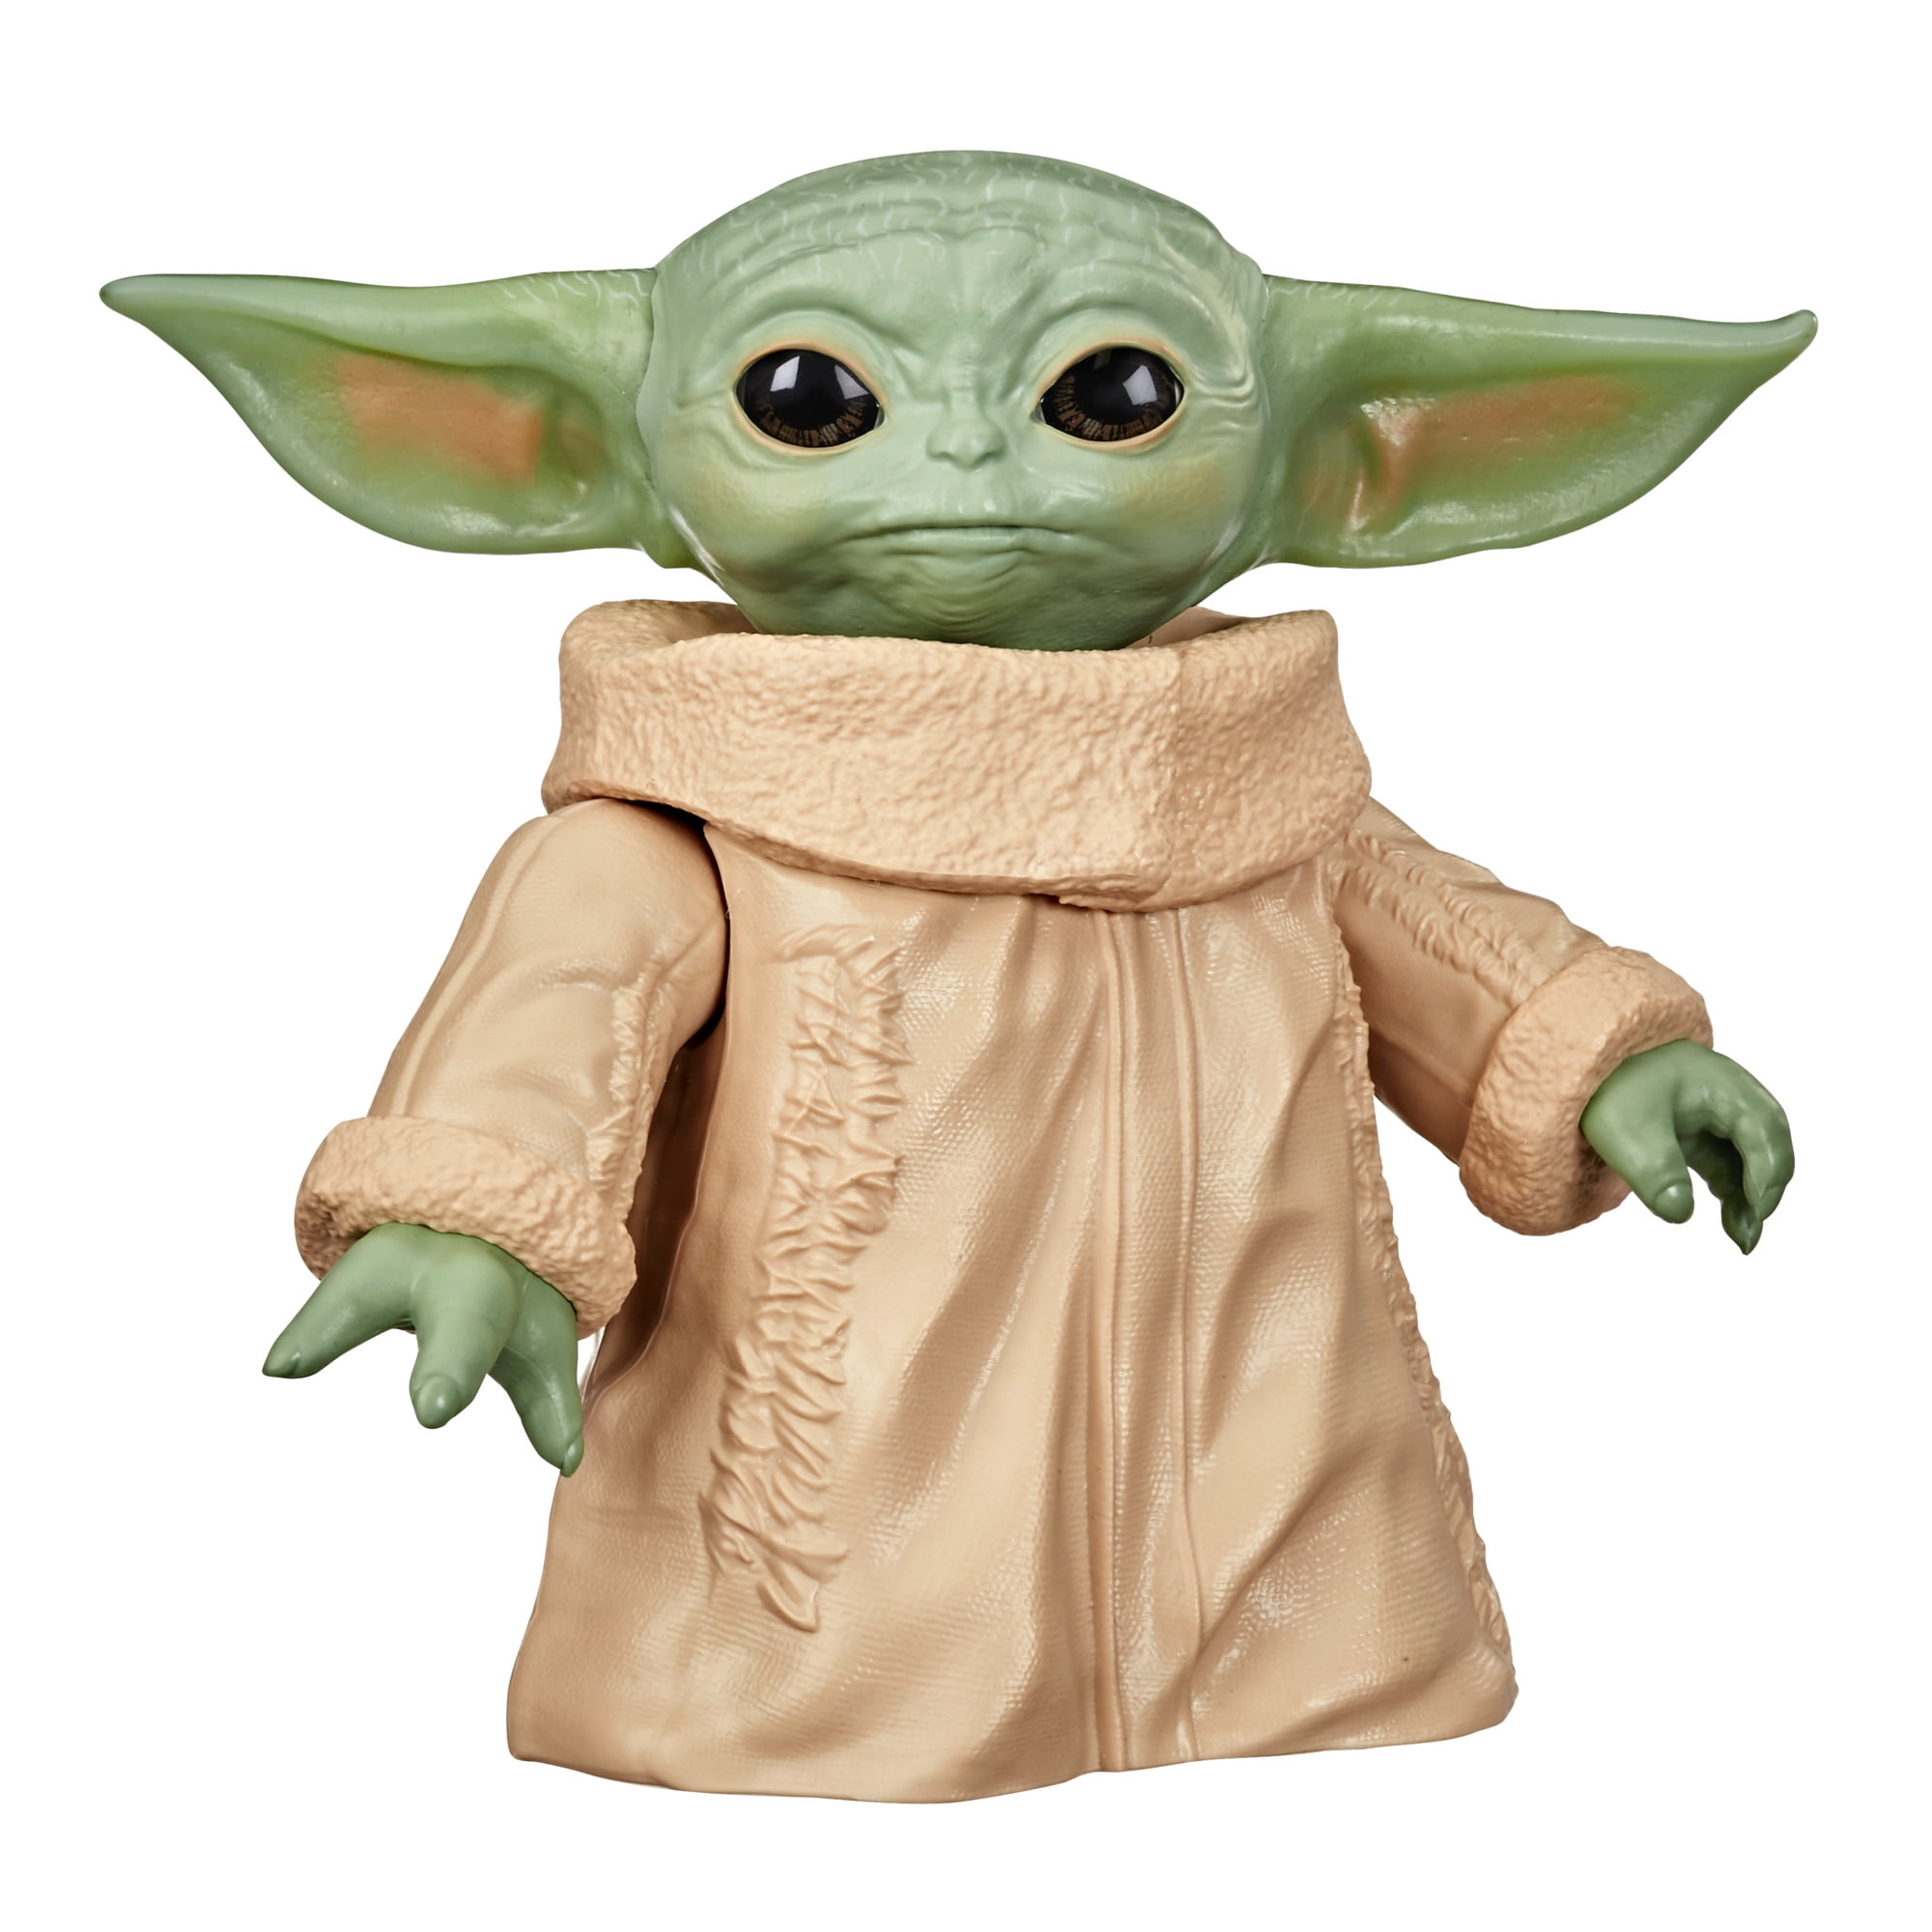 Star Wars Mandalorian Baby Yoda The Force Awakens Action Figure Kids Toy 